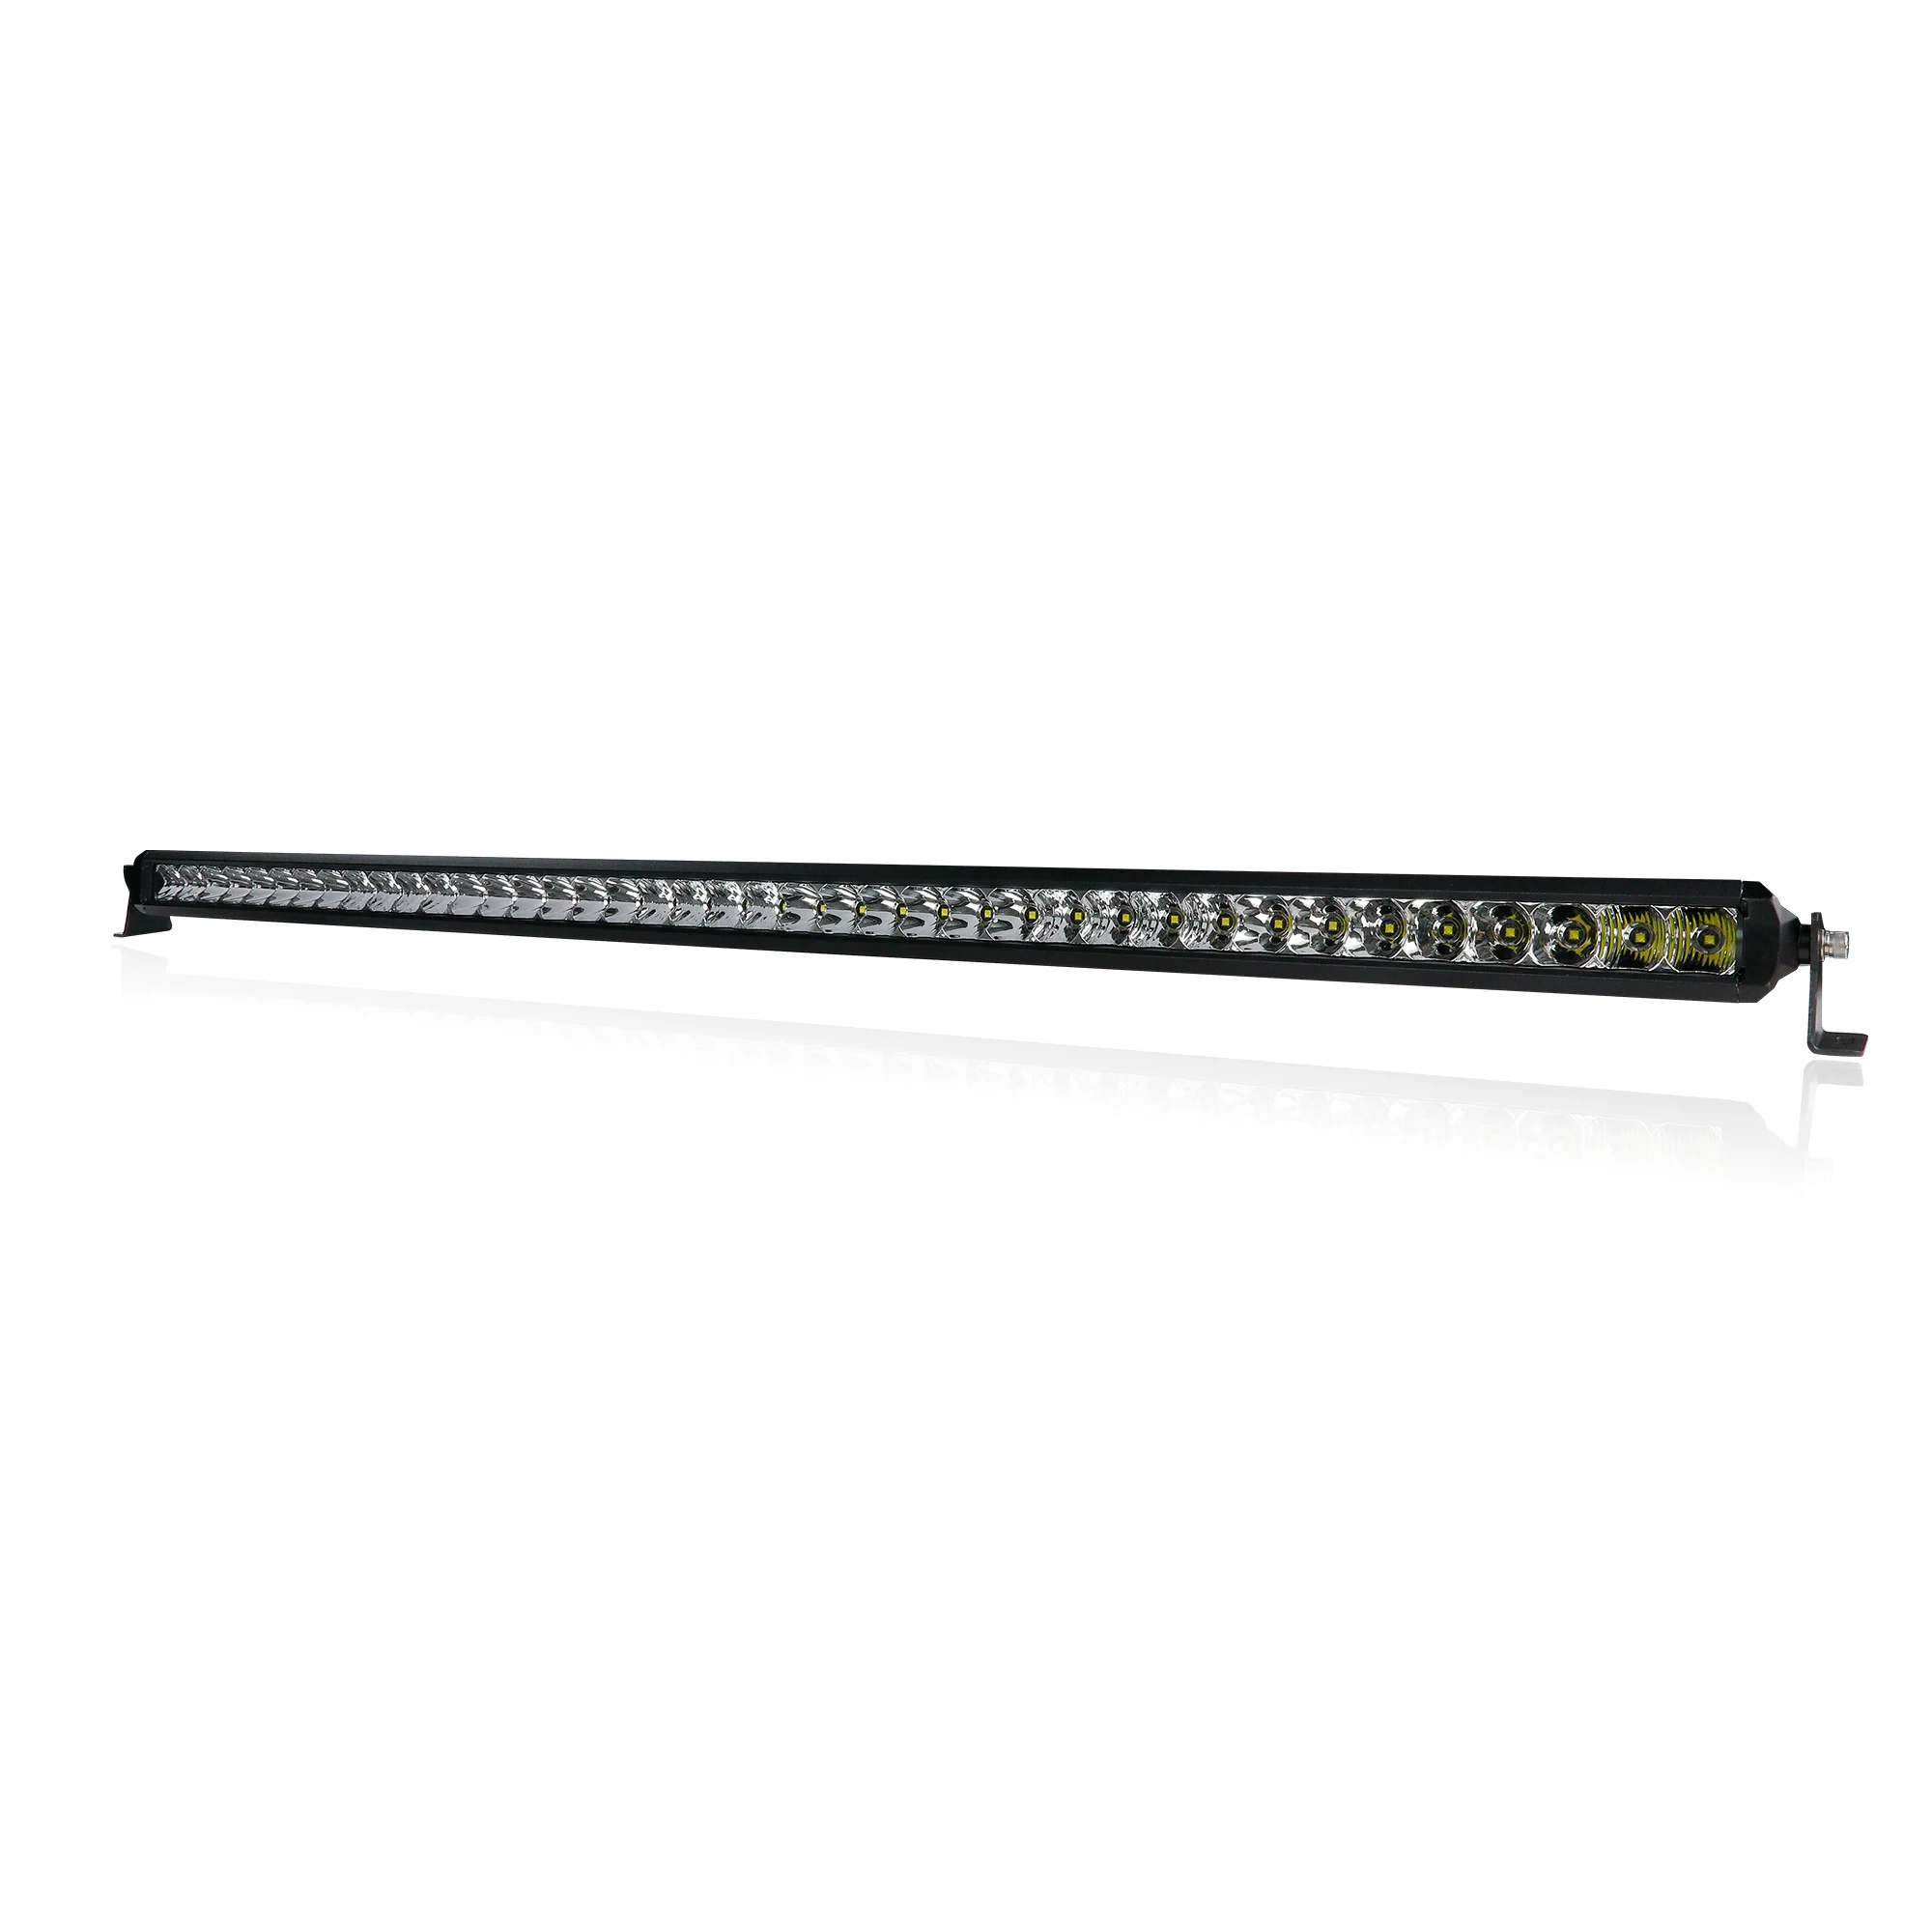 USA Designed AURORA Screwless Hot-selling Brightest 4x4 Single Row 40inch LED Light Bar